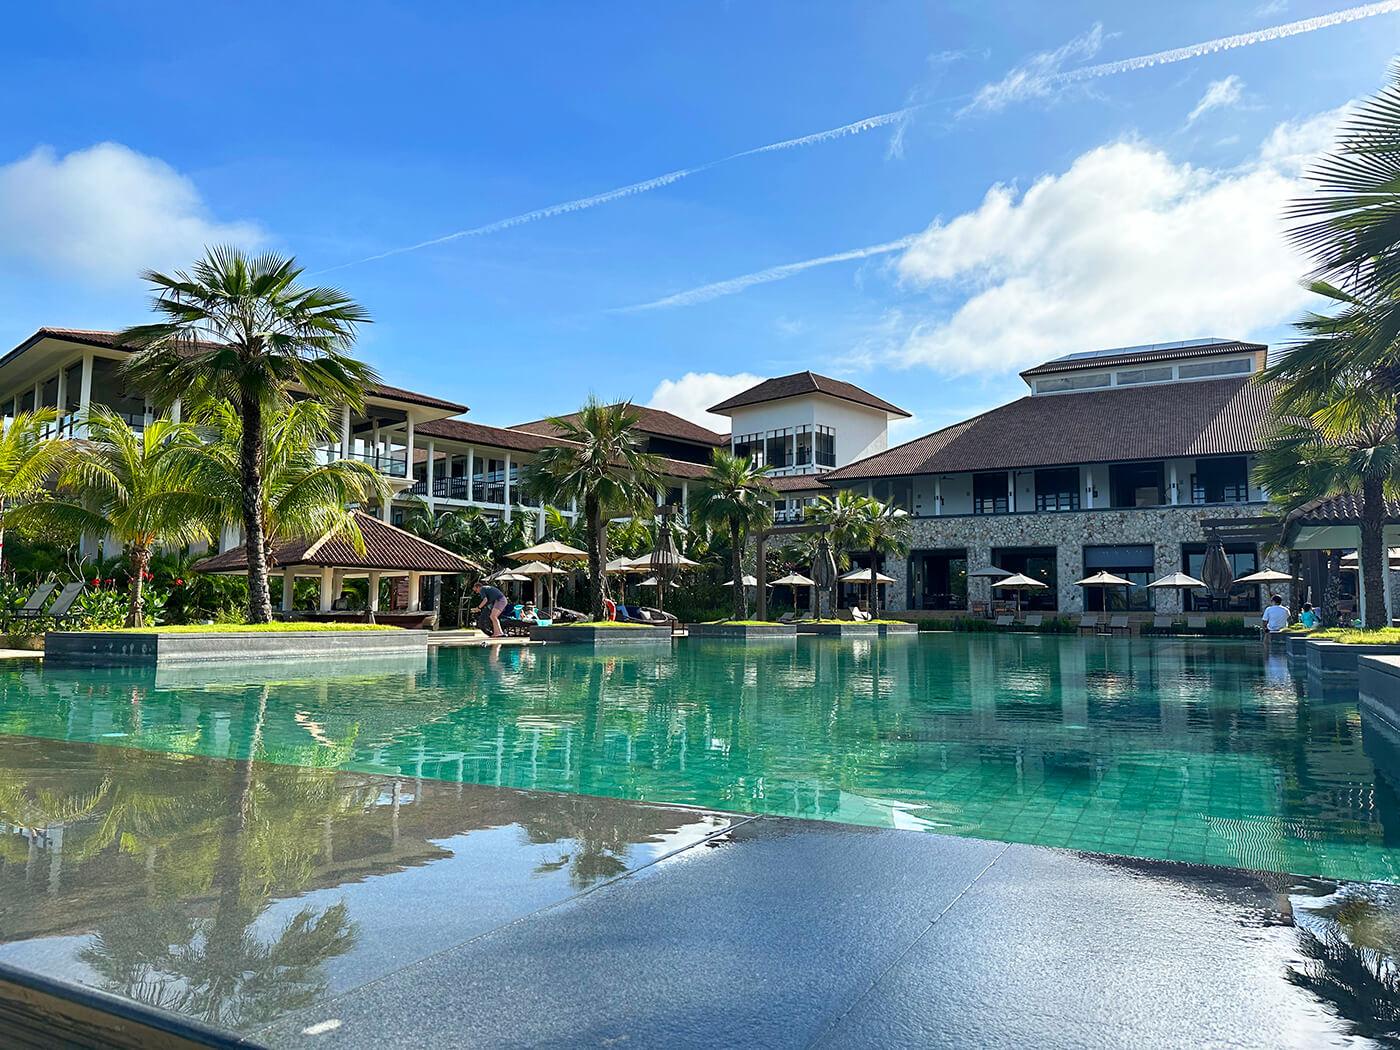 Anantara Desaru Coast Resort - Lagoon Pool